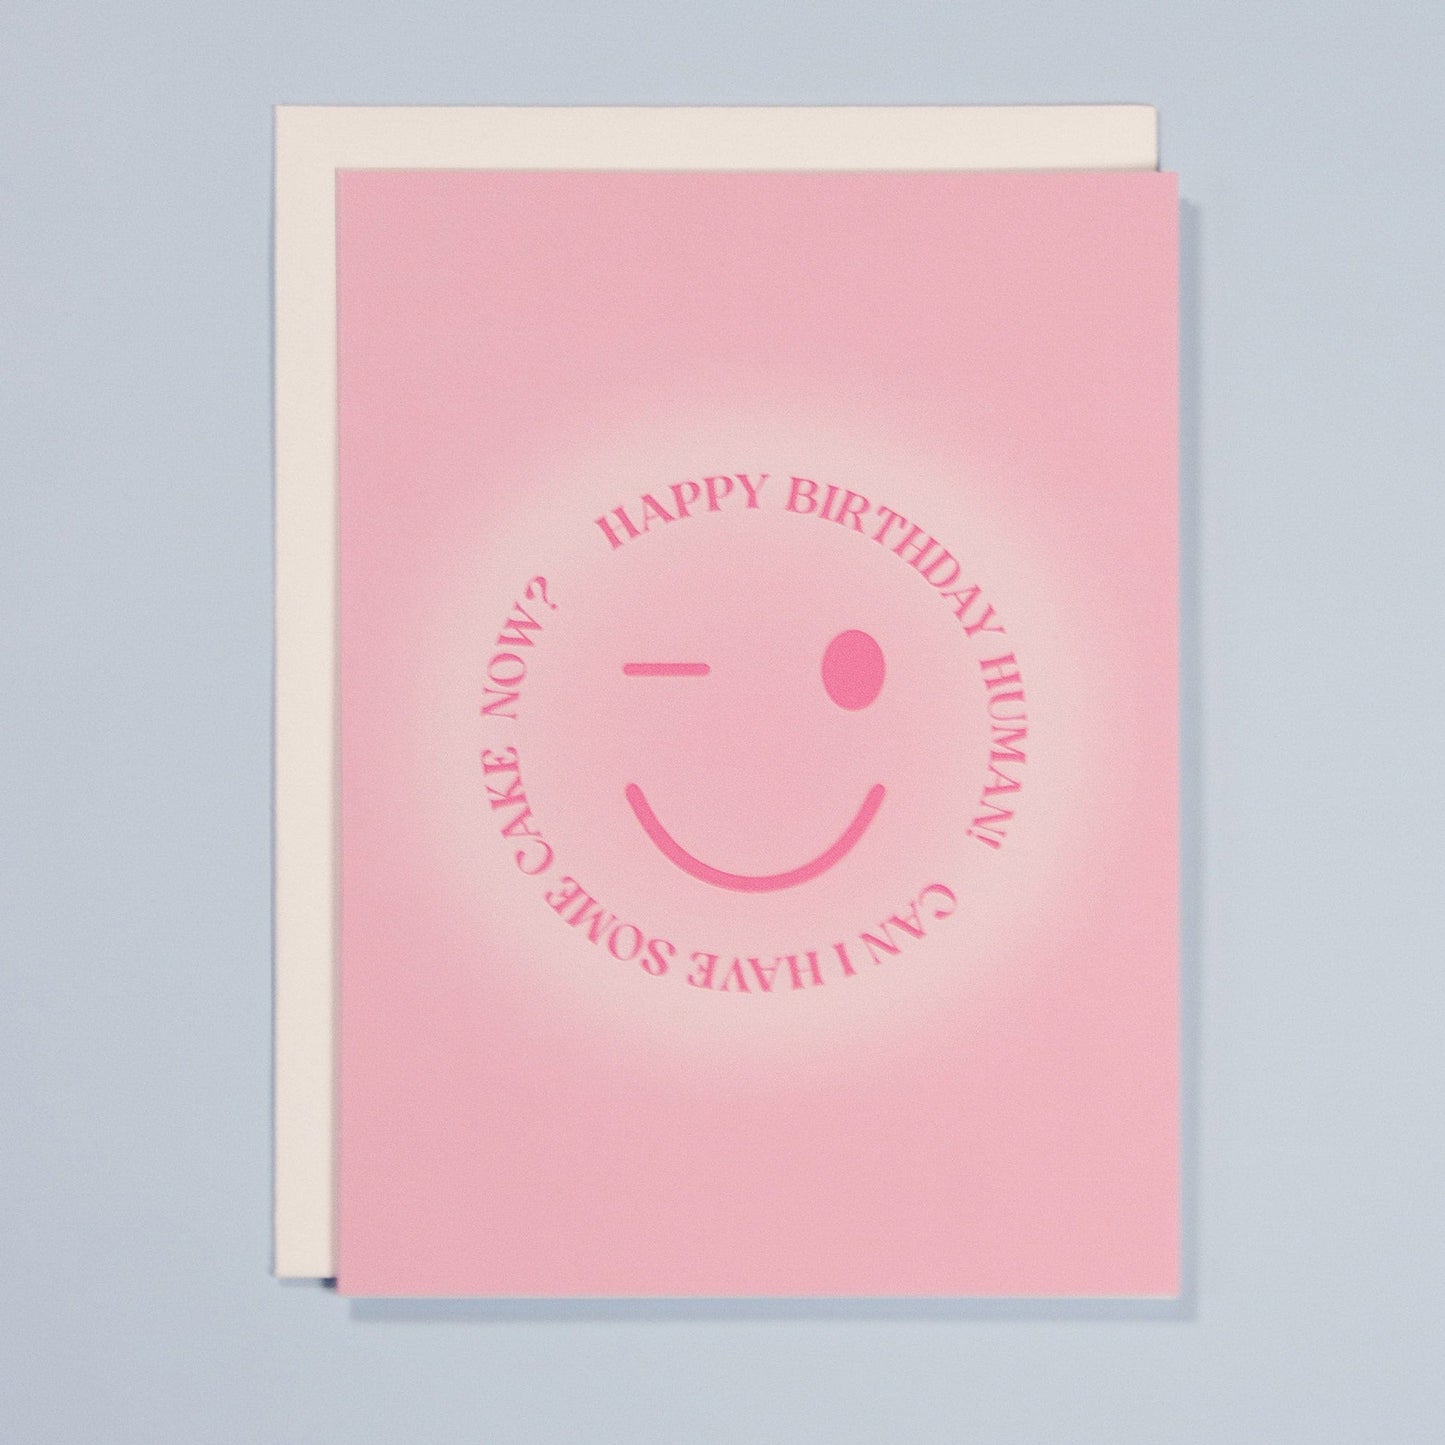 Greeting card "Happy birthday human" 03